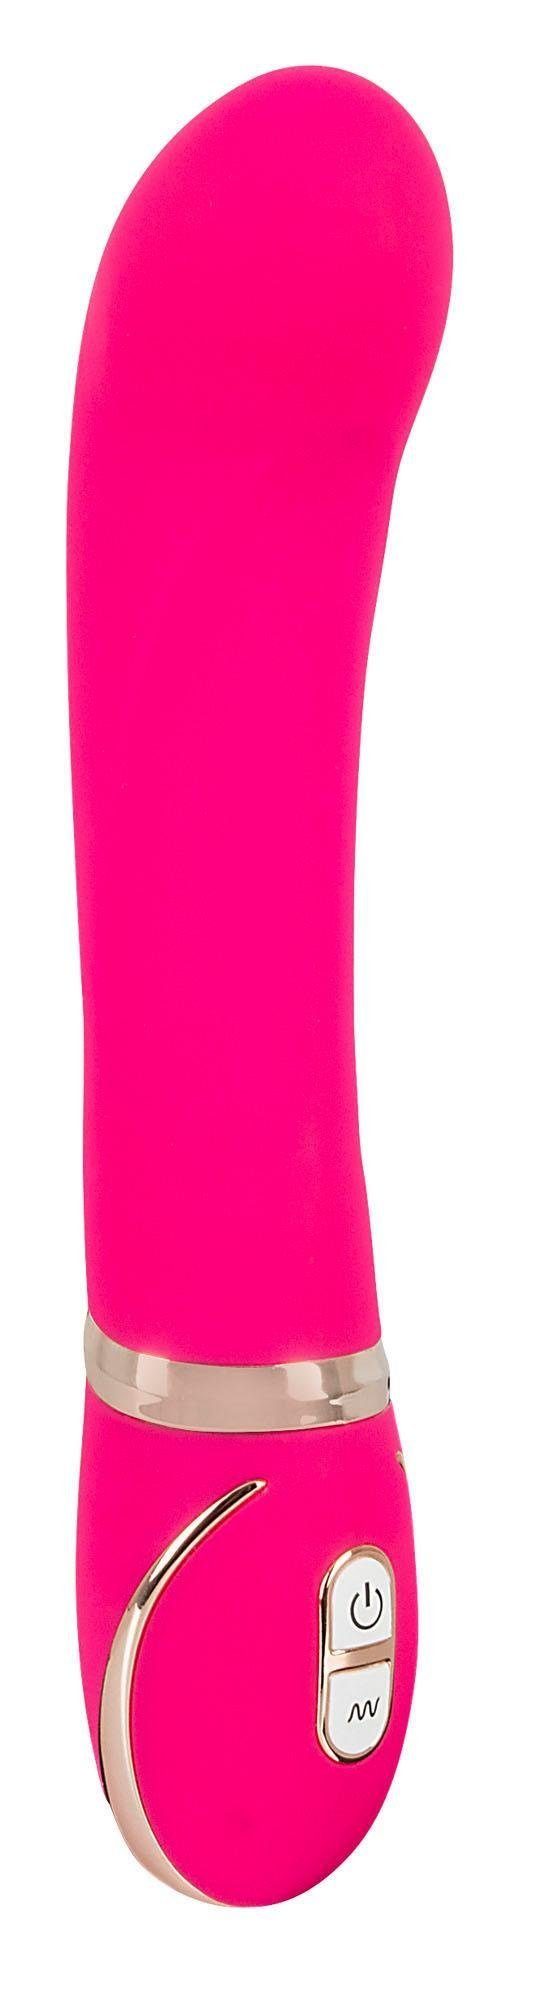 wasserdicht Pink, Vibe Front Row G-Punkt-Vibrator Couture